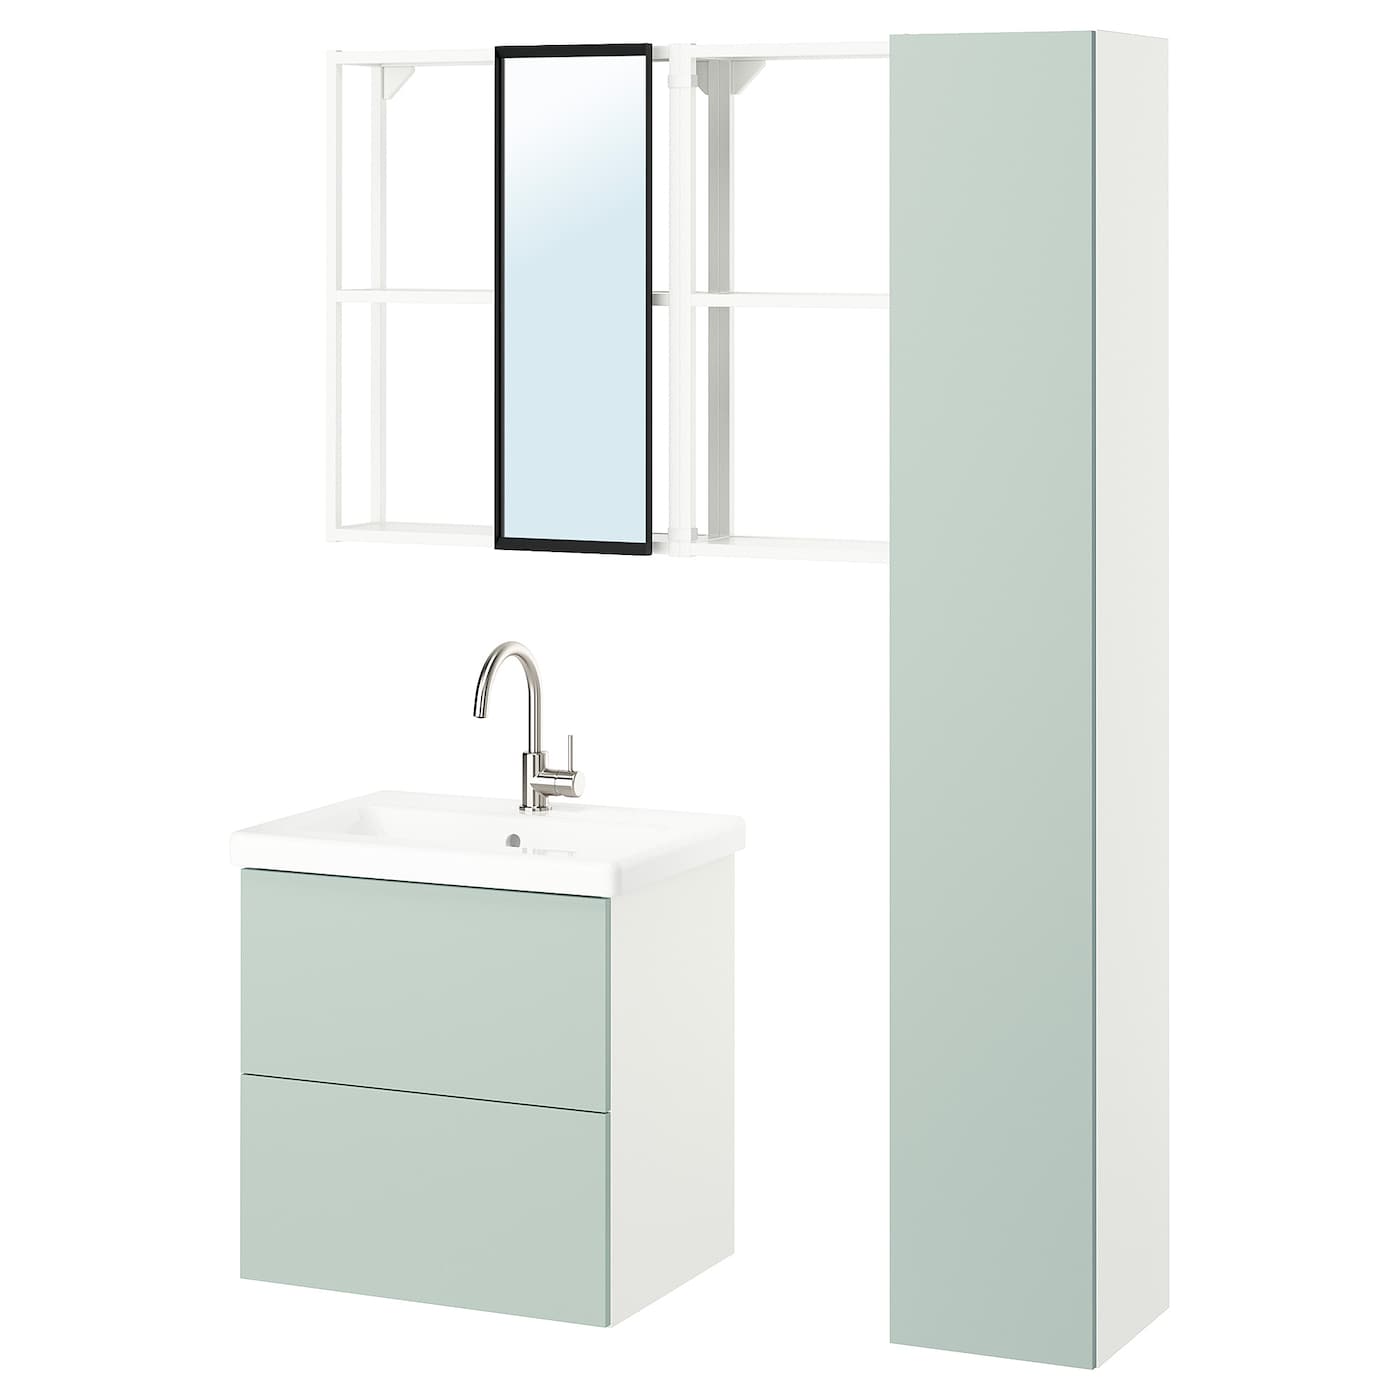 Комбинация для ванной - IKEA ENHET, 64х43х65 см, белый/серо-зеленый, ЭНХЕТ ИКЕА